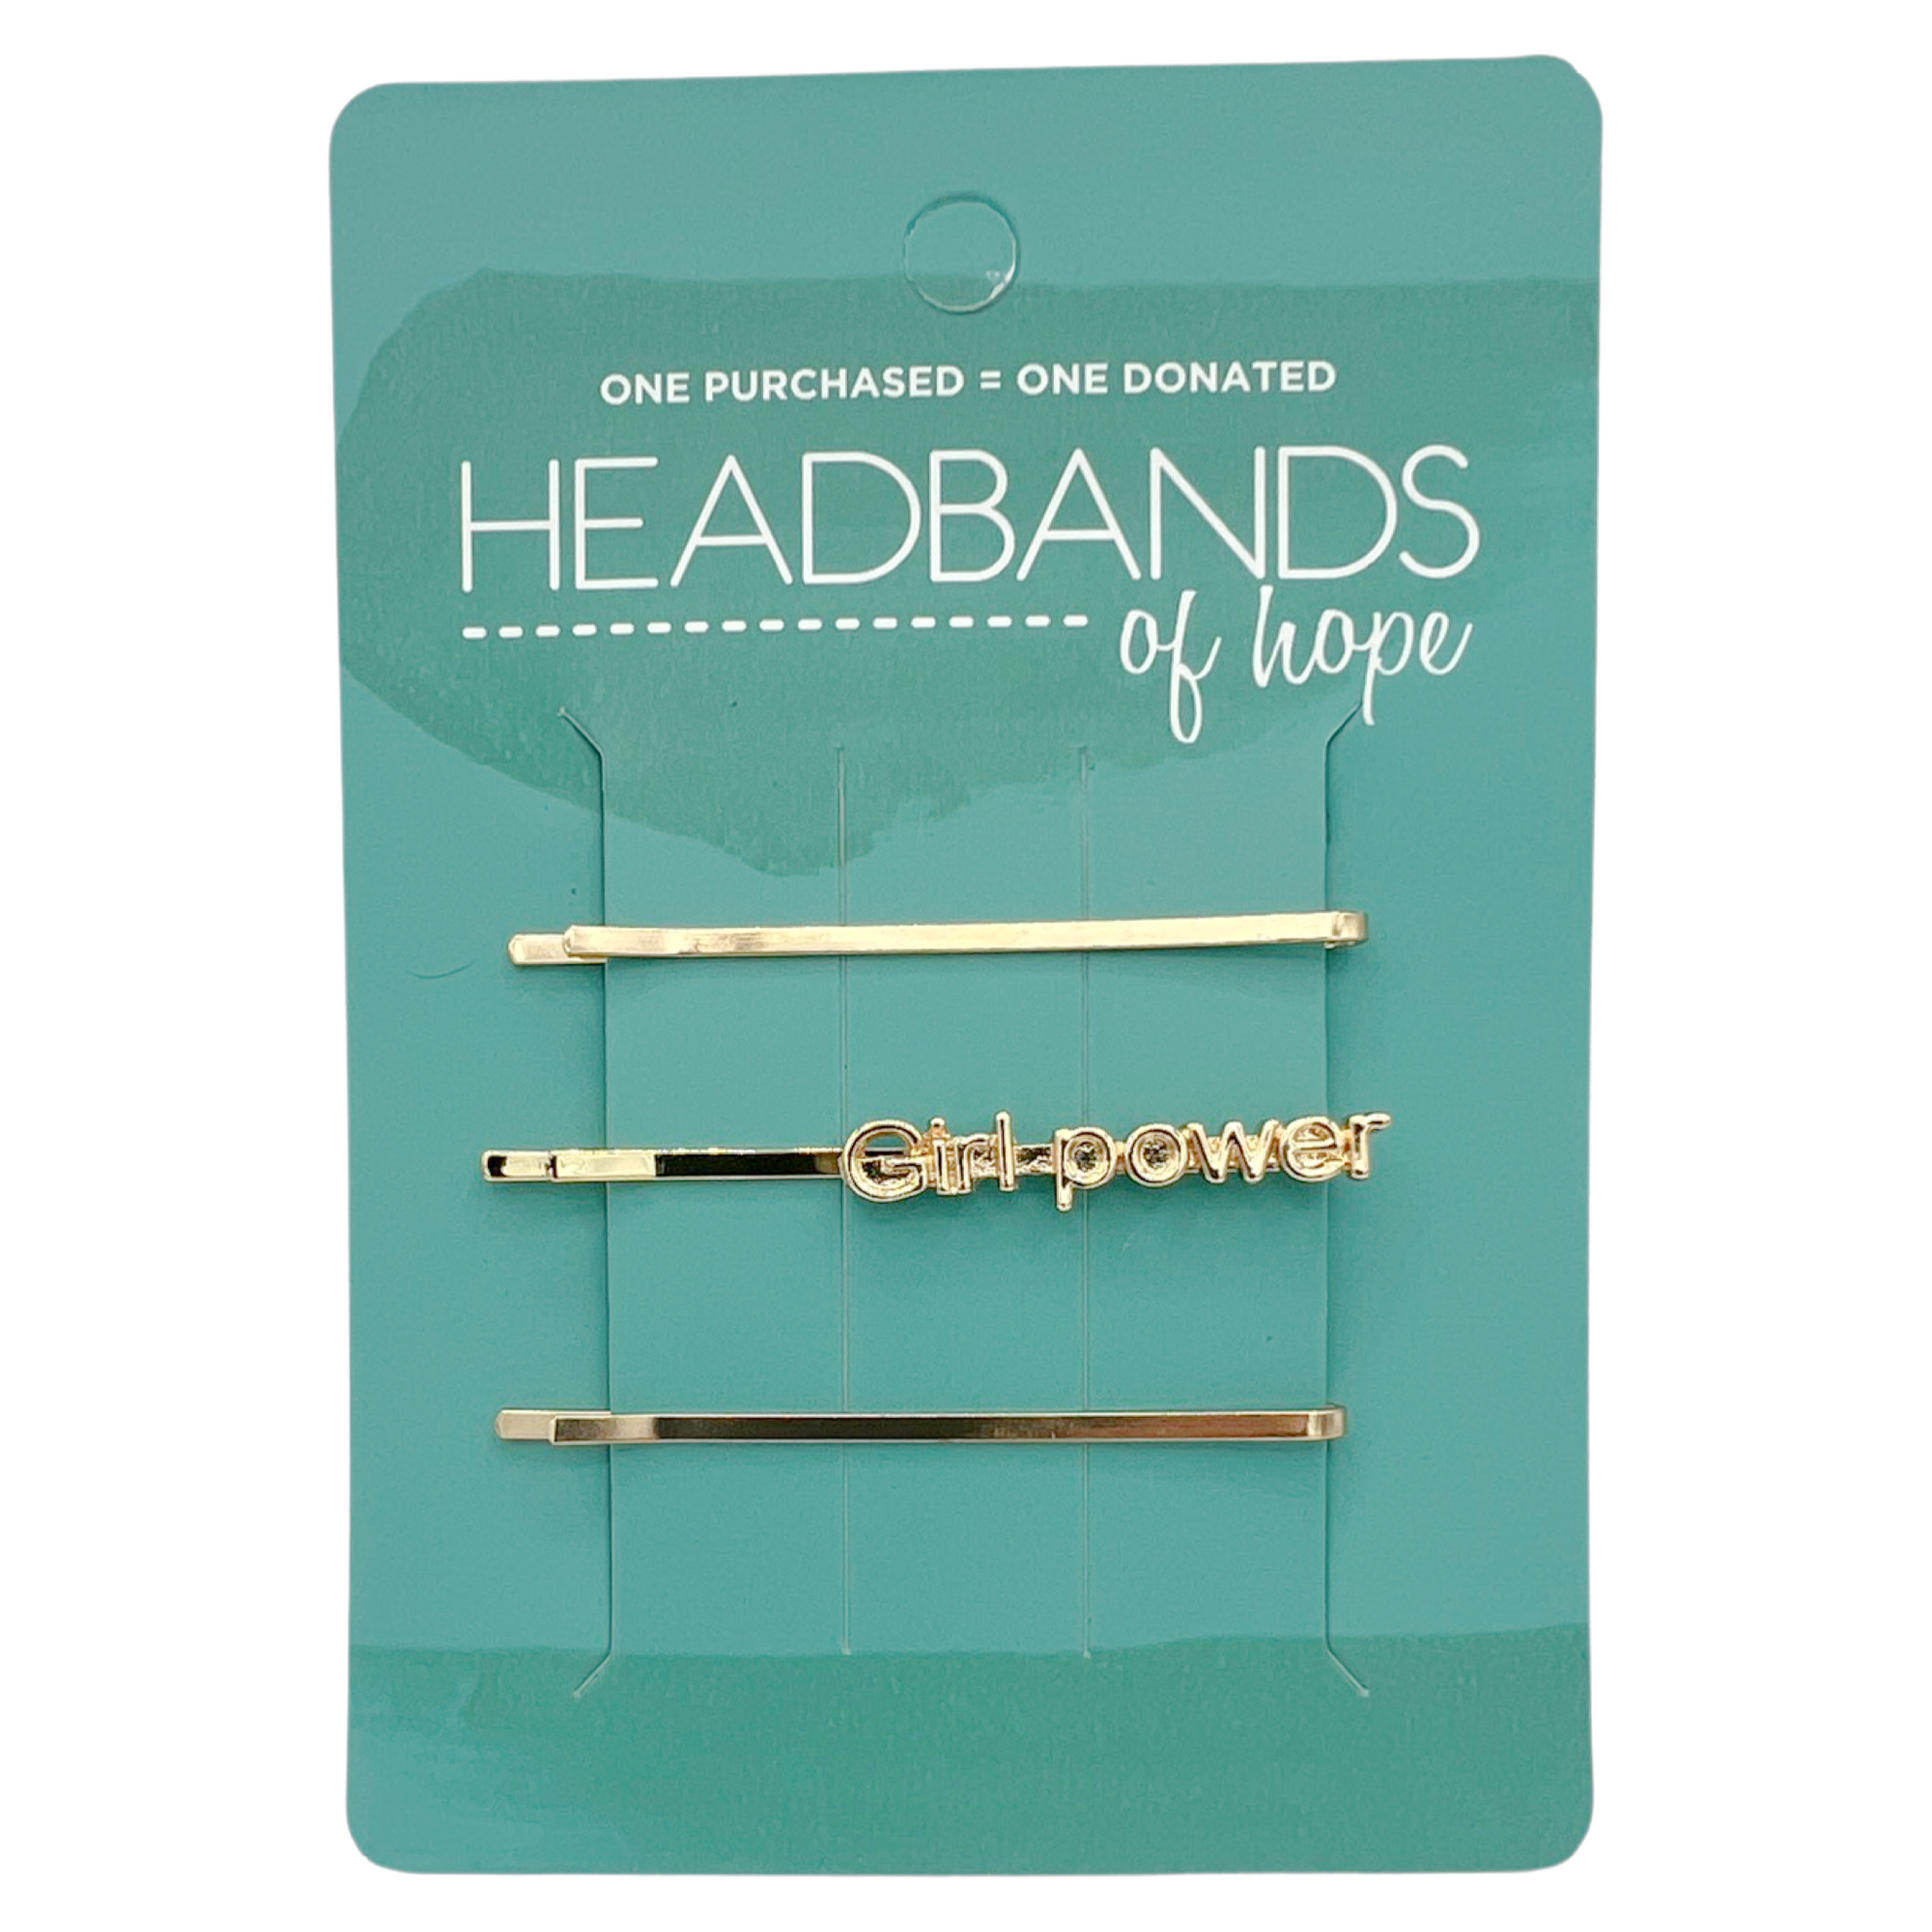 Hair Pins Set - Girl Power